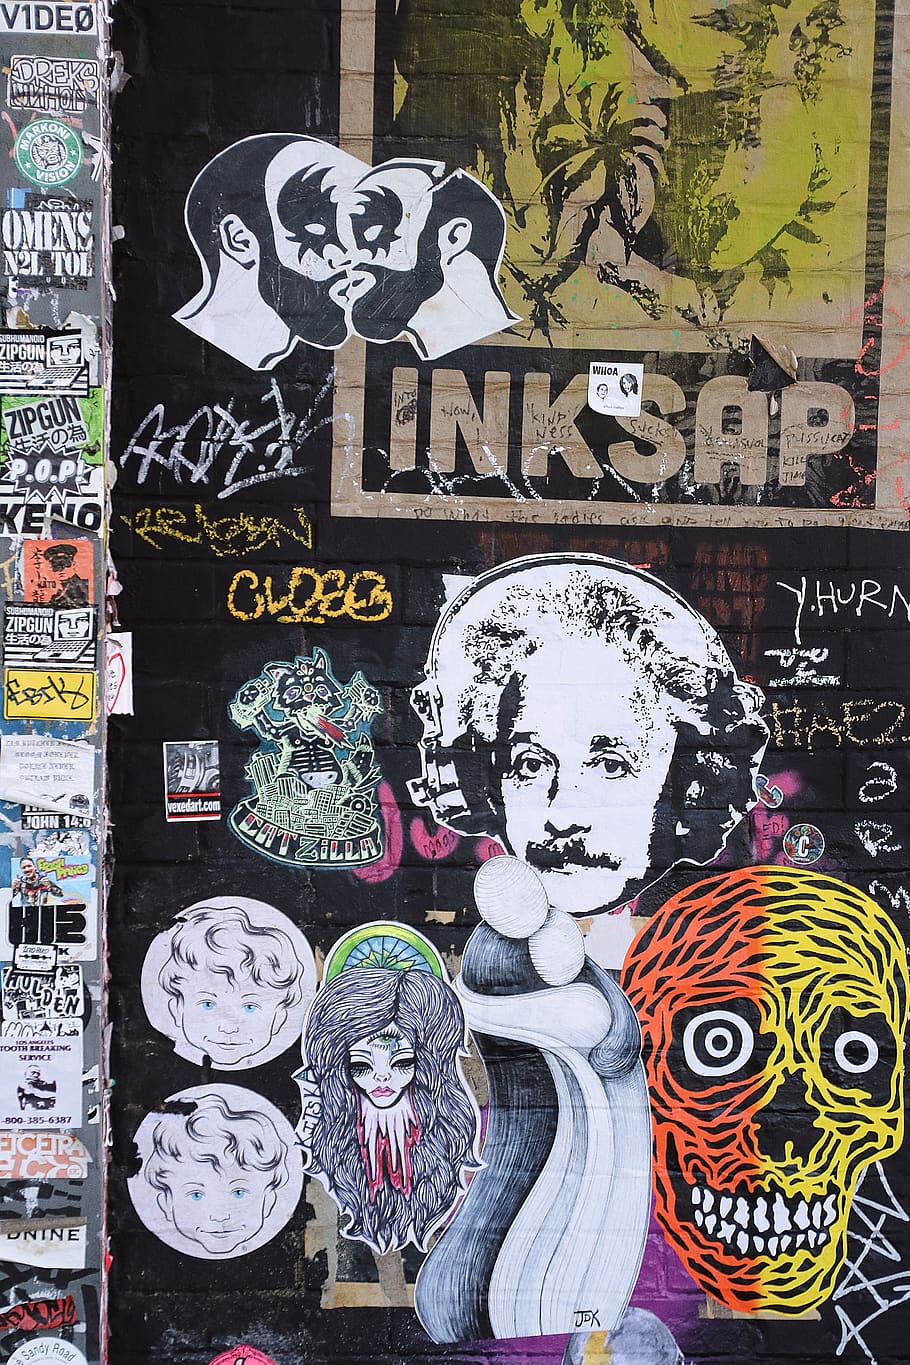 background, textures, wall art, graffiti, stickers, grunge, graffiti art, street, tag, tagging